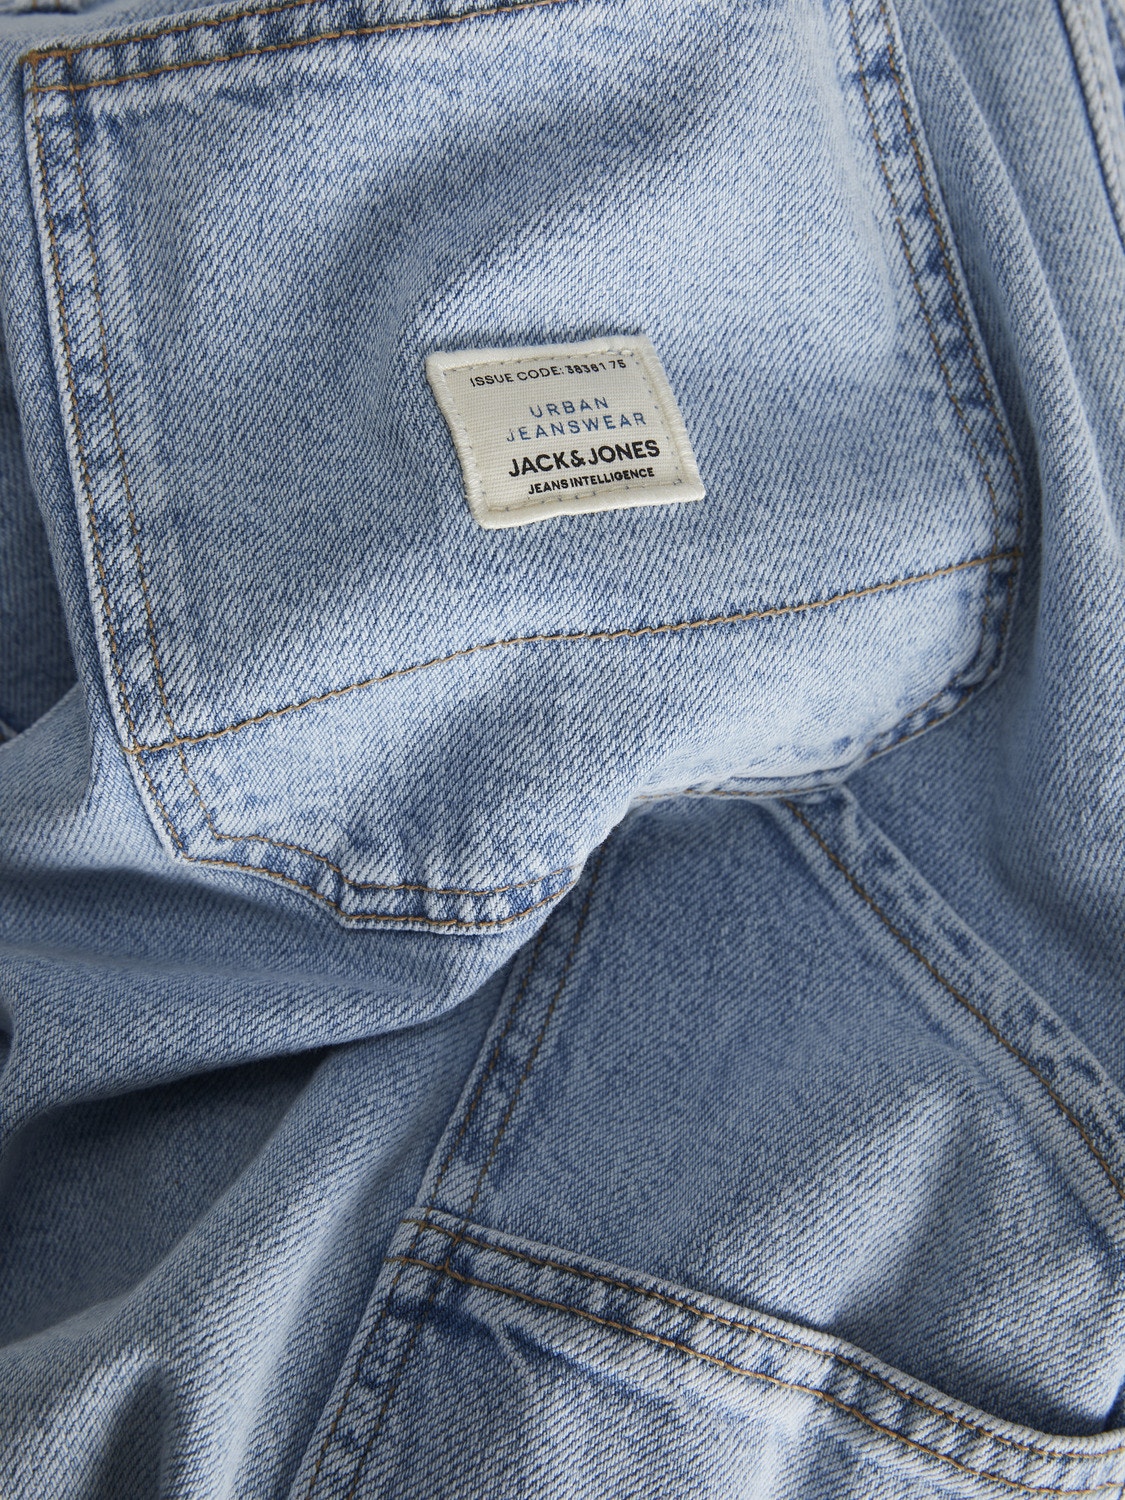 Jack & Jones JJIEDDIE JJUTILITY MF 491 SN Loose fit jeans -Blue Denim - 12229556